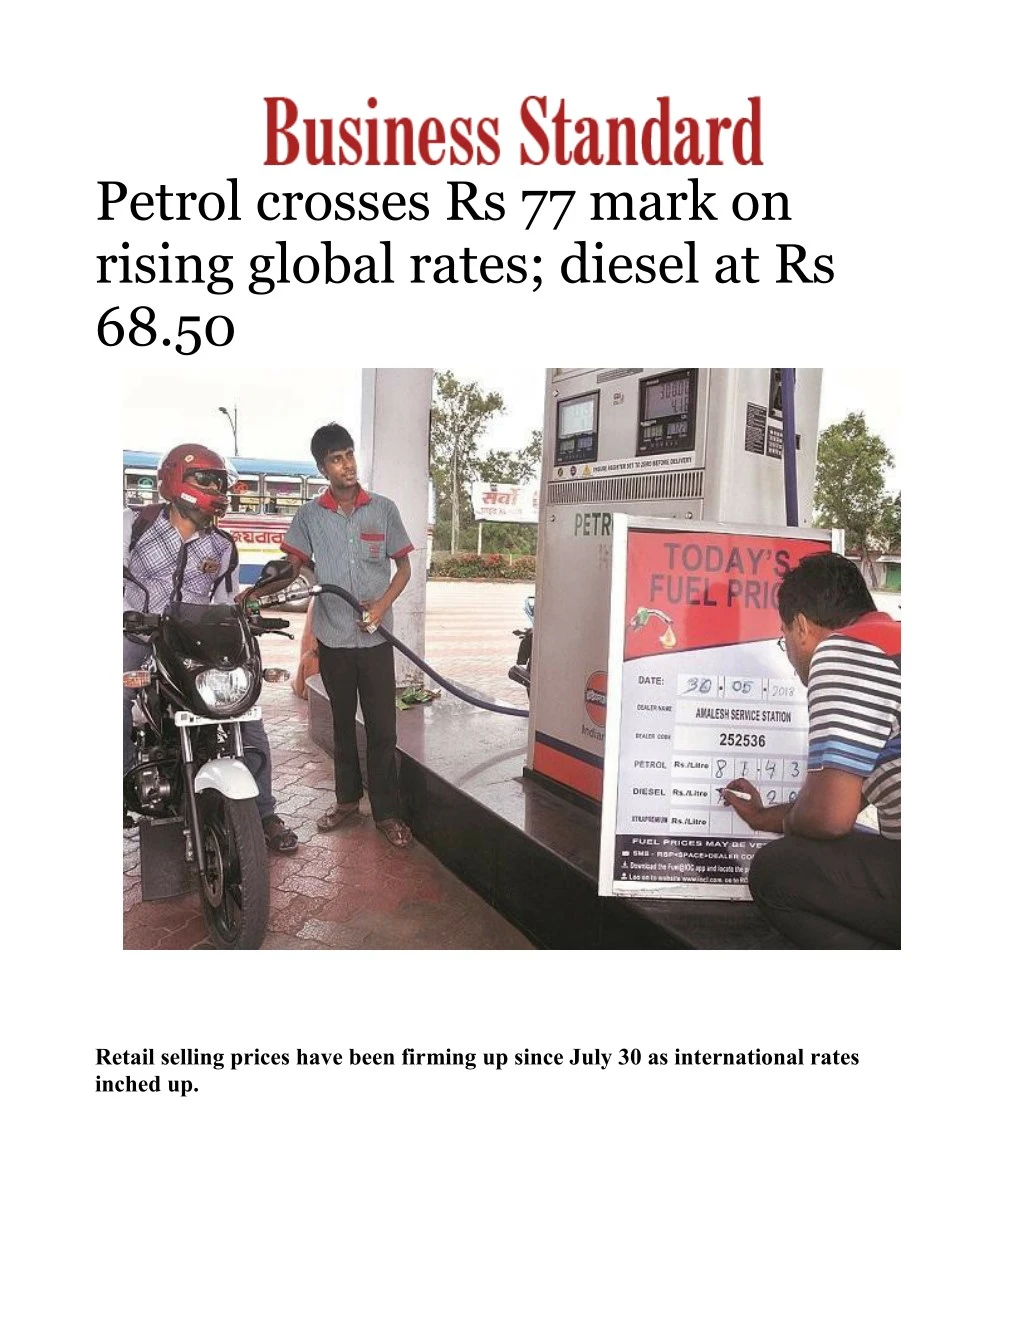 petrol crosses rs 77 mark on rising global rates